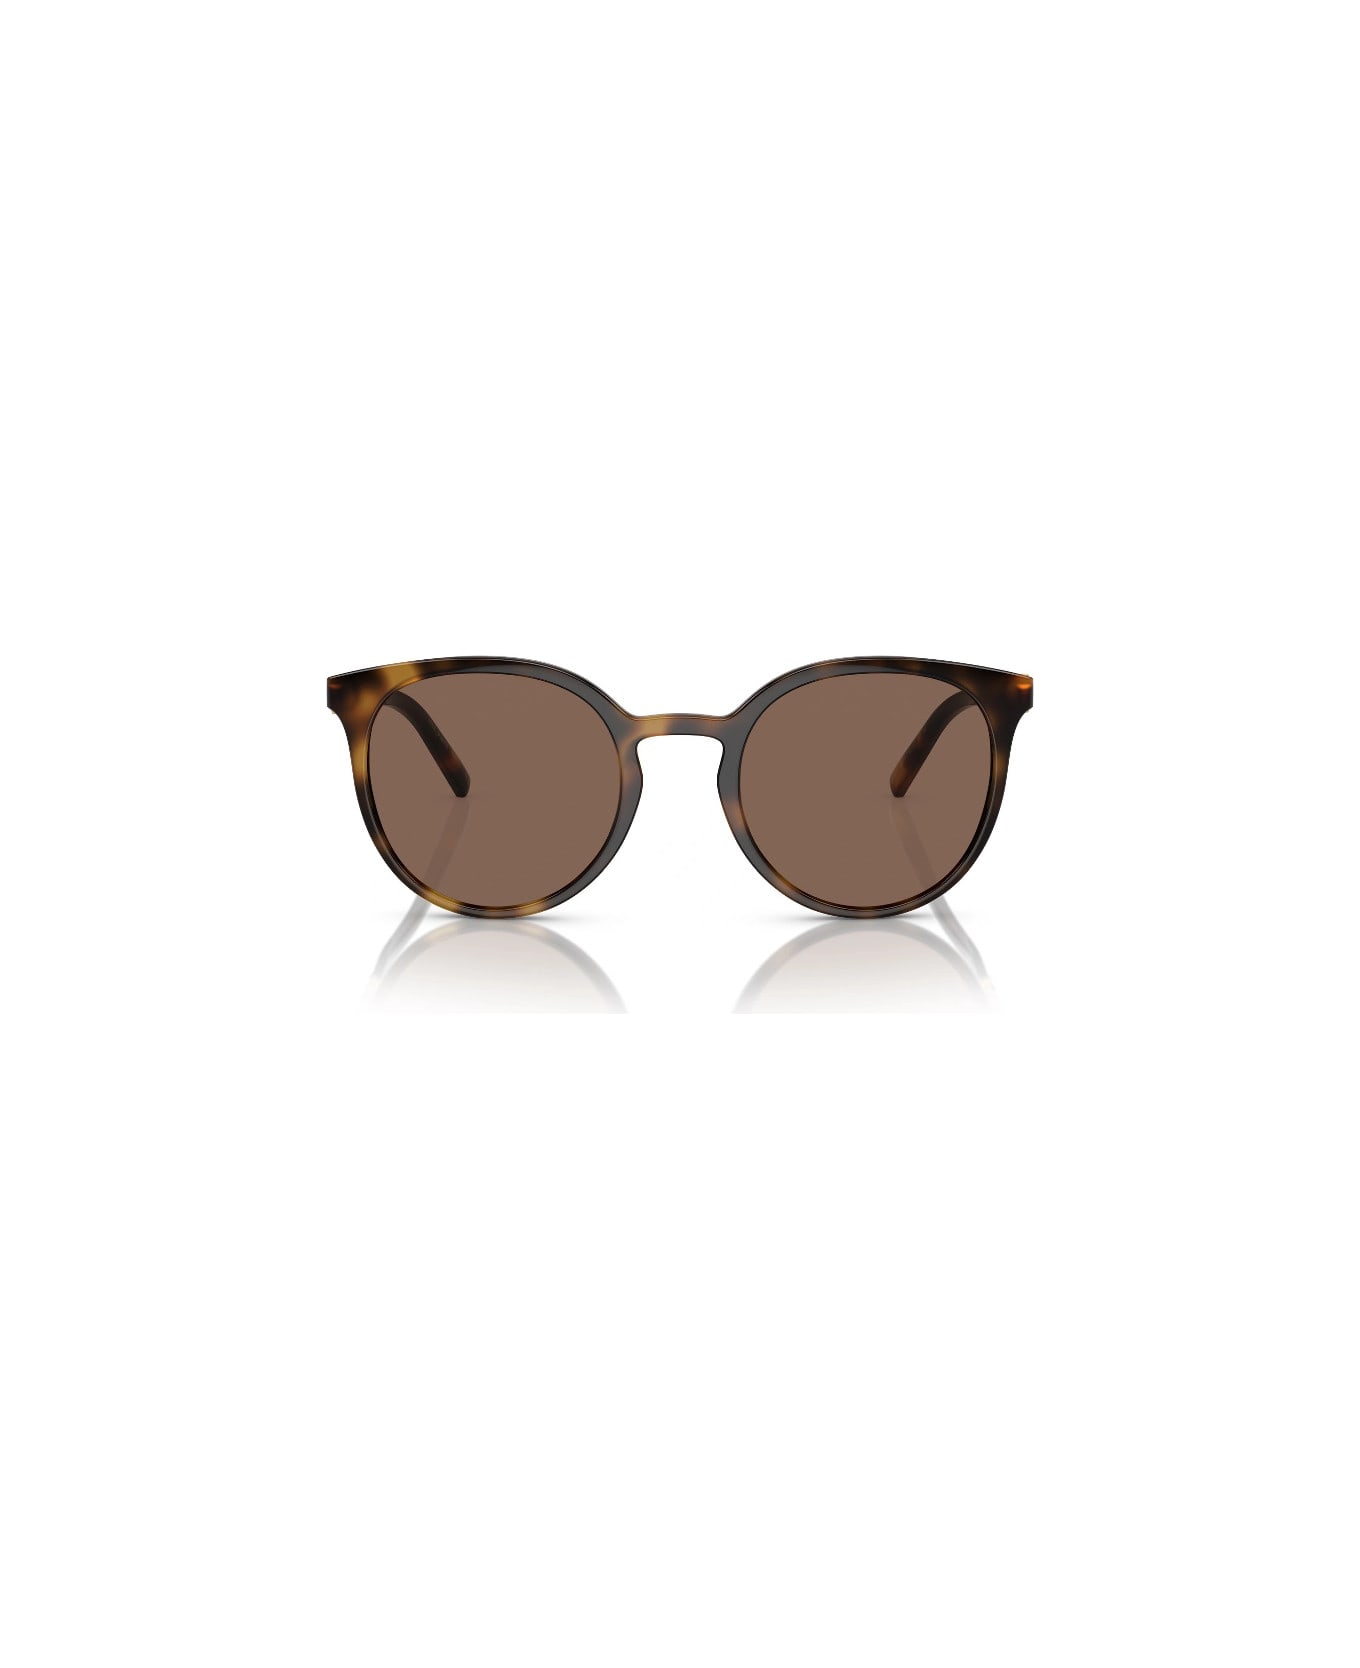 Dolce & Gabbana Eyewear DG6189 502/73 Sunglasses - Tartarugato